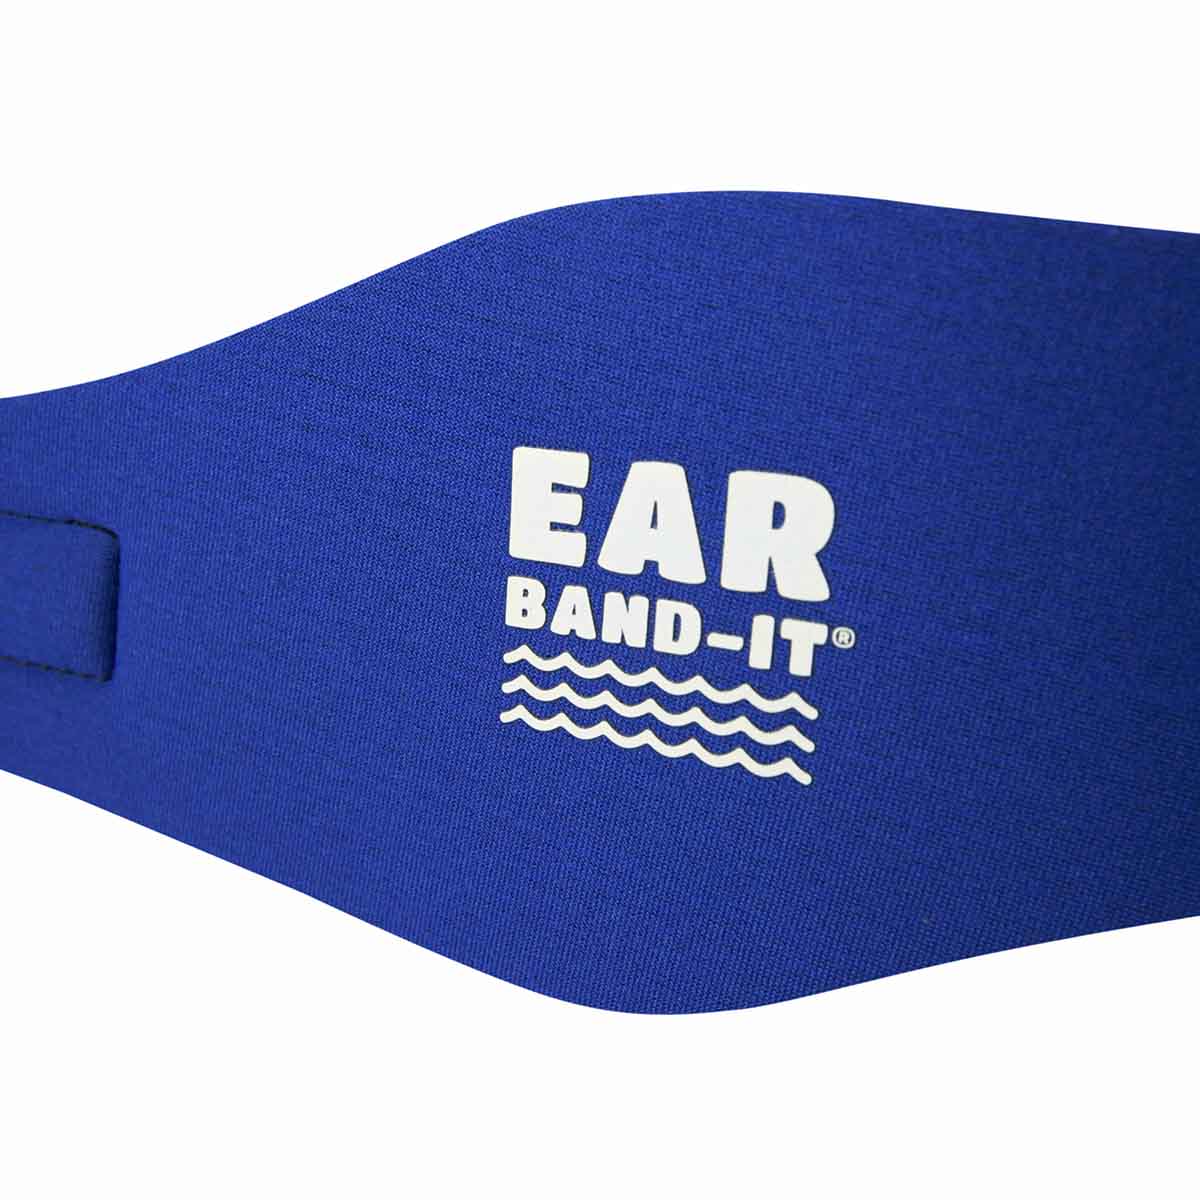 Ear Band-It Swimmer's Headband - Blue